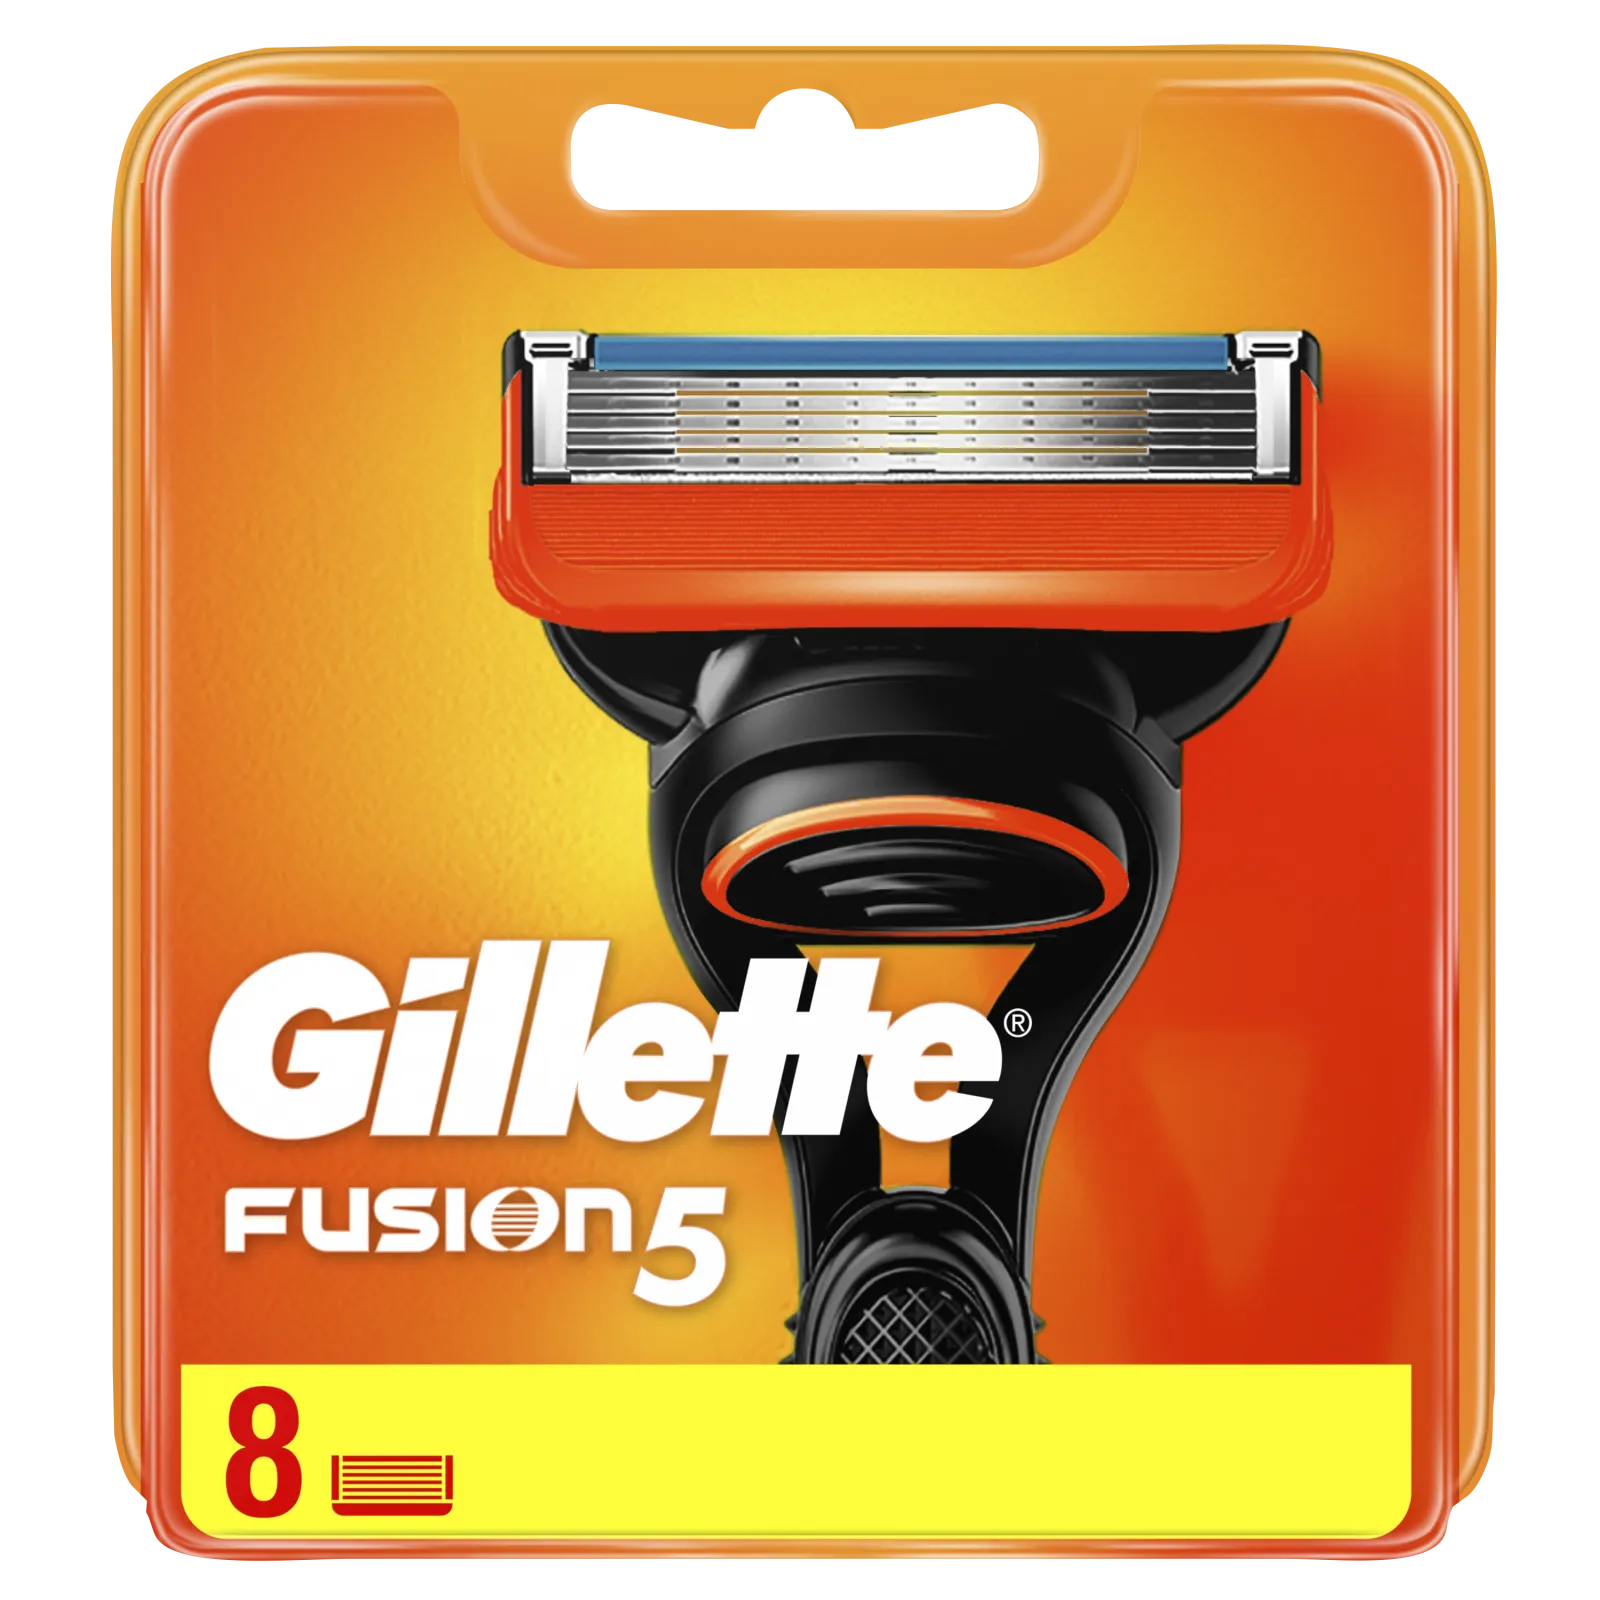 Gillette Fusion 8 NH 1×8